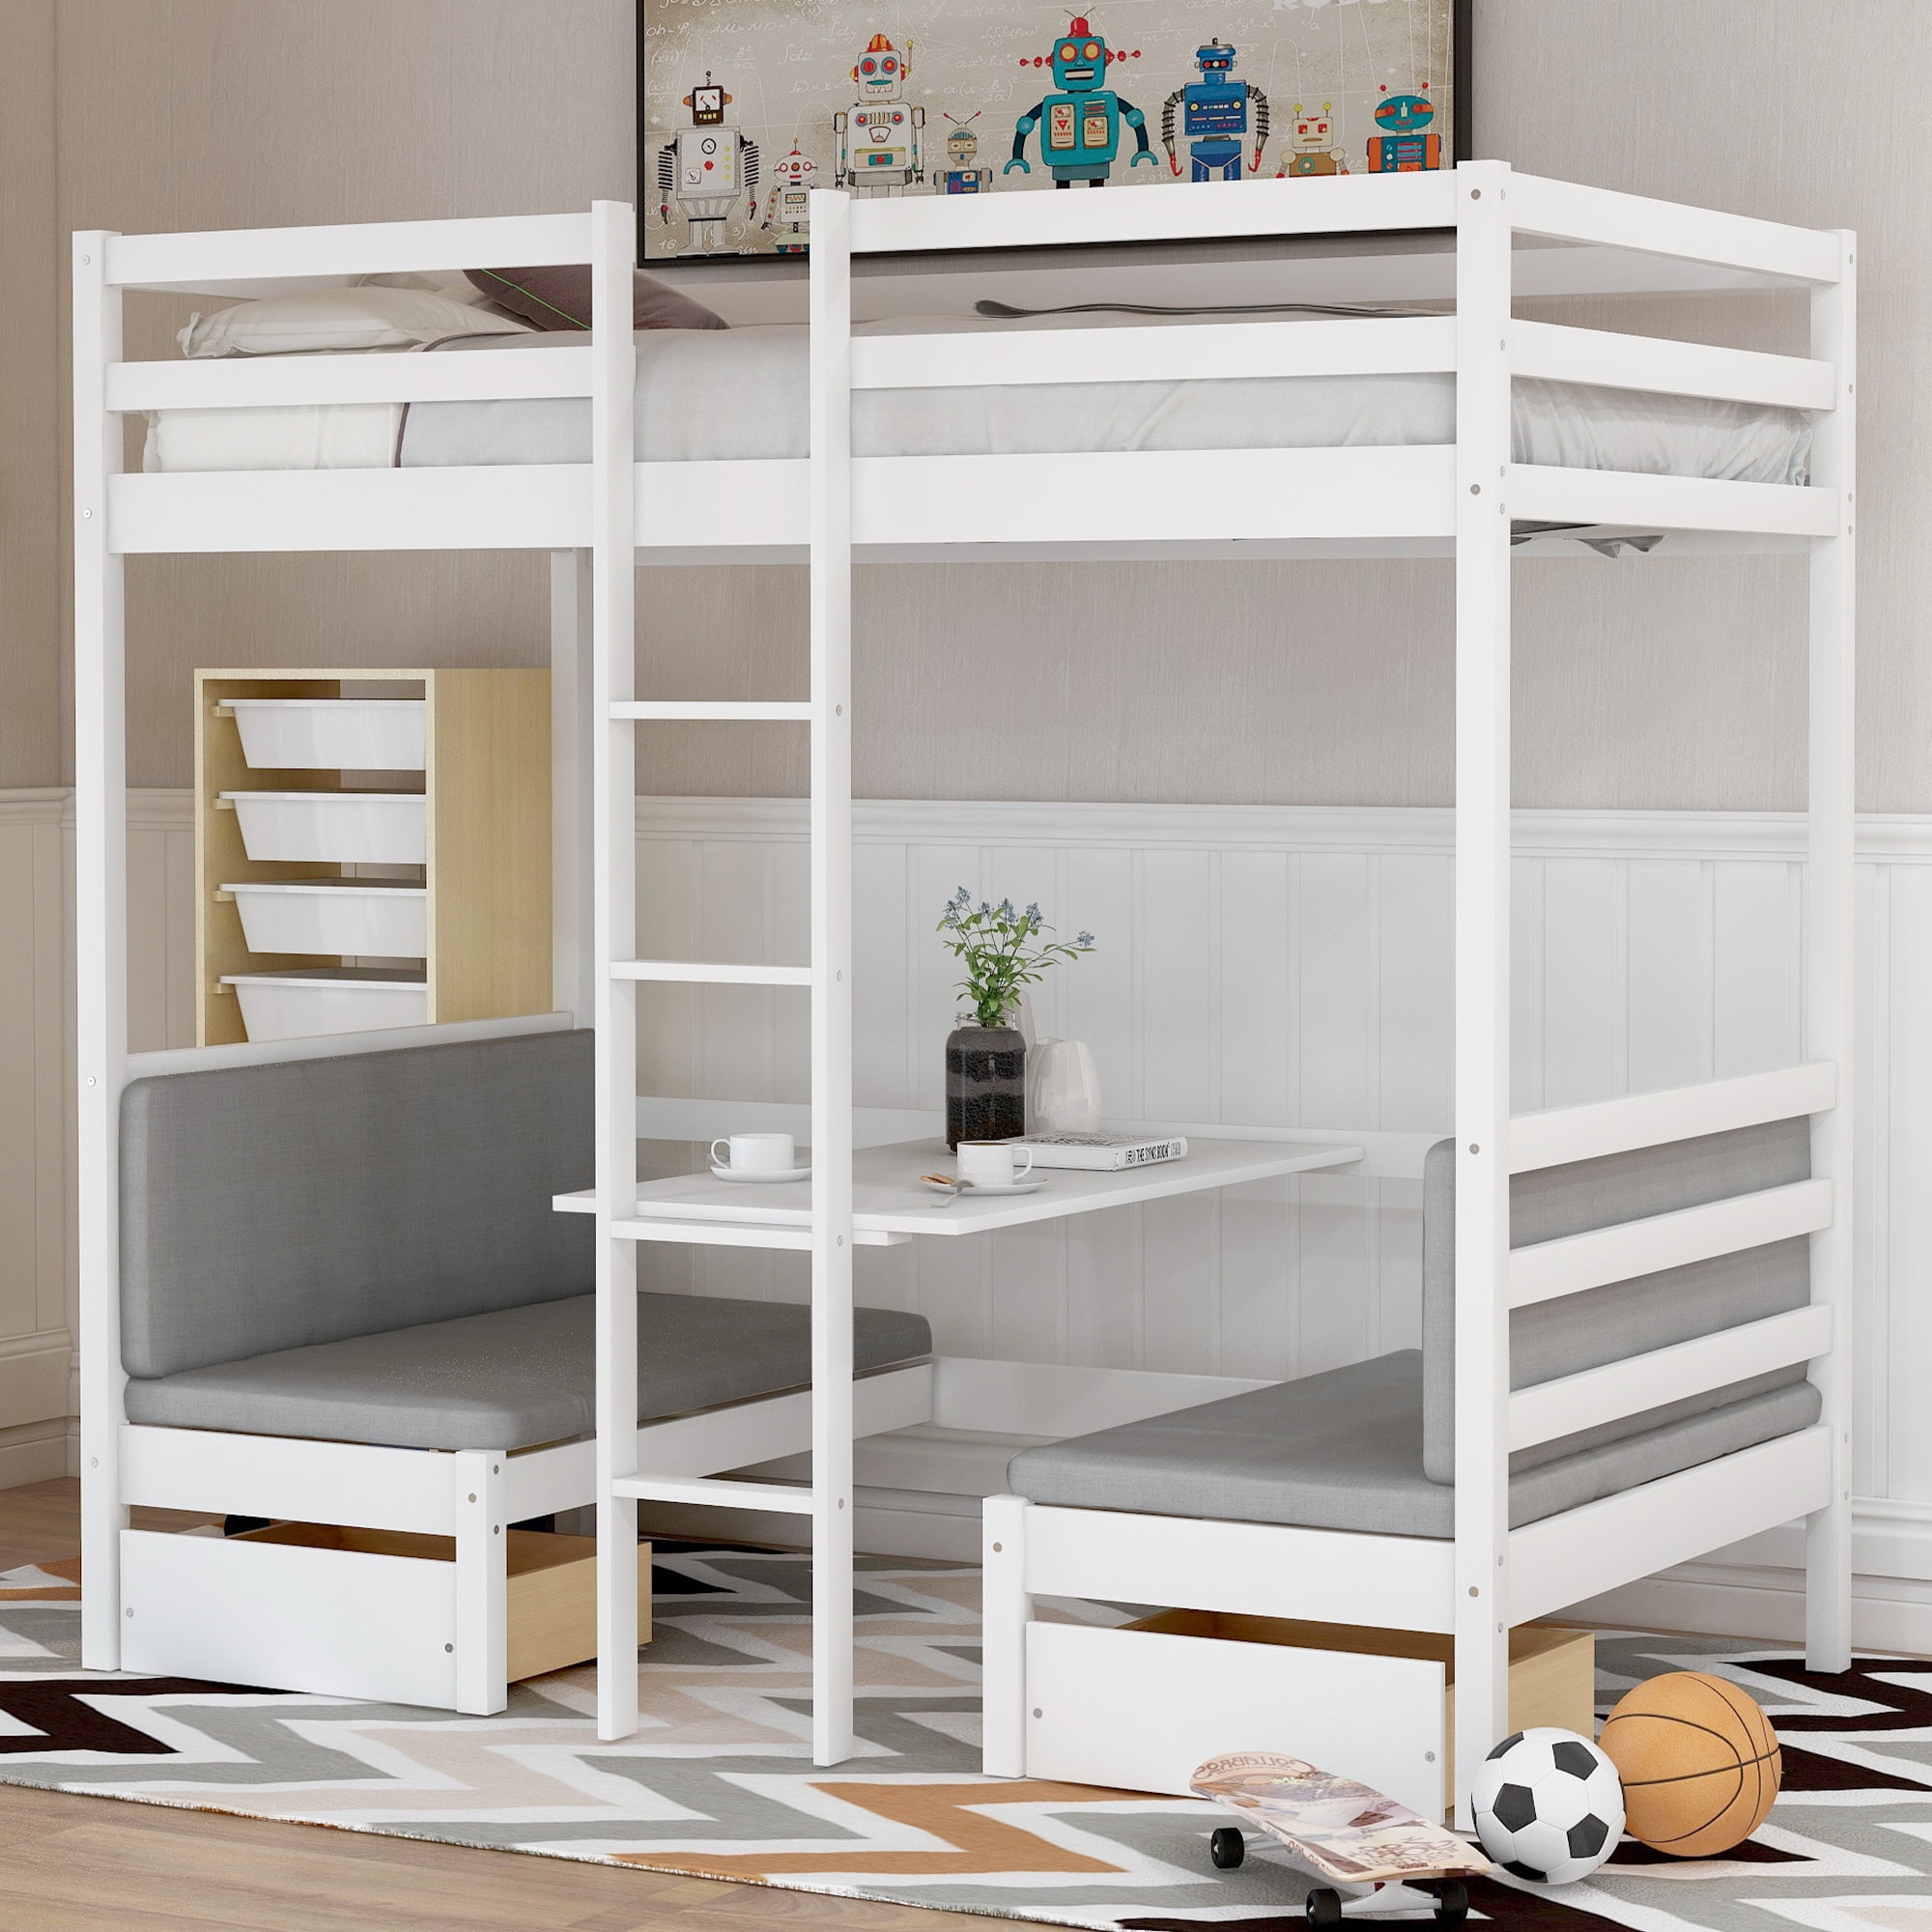 Euroco Solid Wood Convertible Twin Bunk, Wooden Bunk Bed Shelf